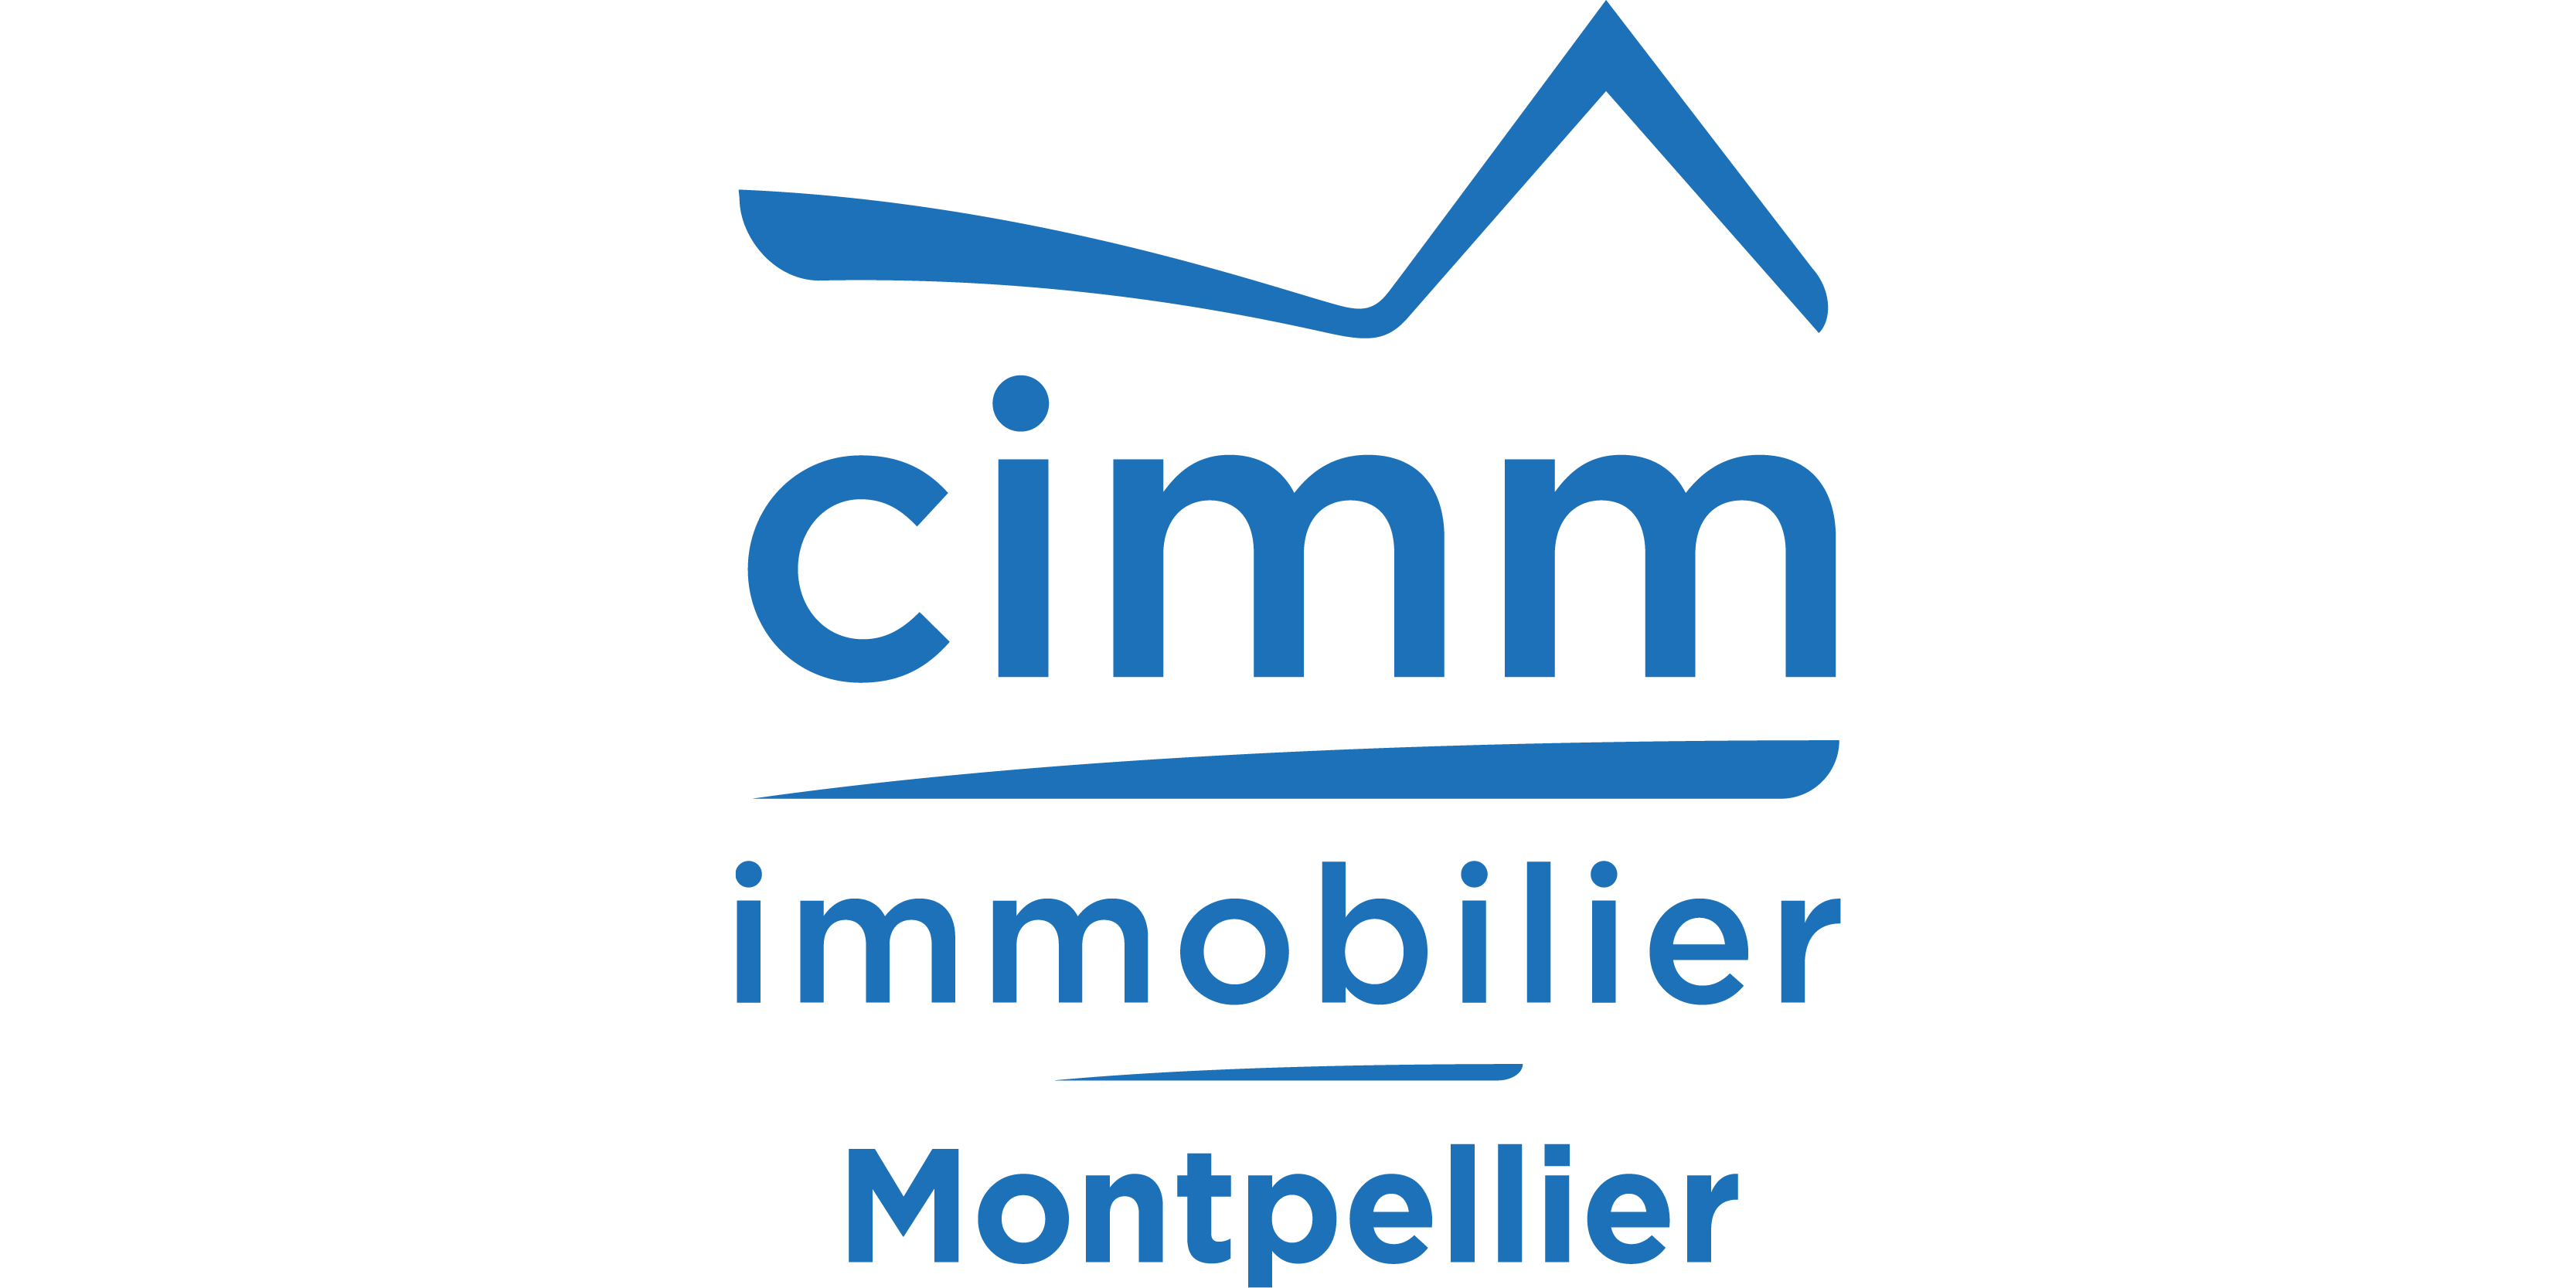 019_CIMM_Montpellier_logo_CMJN